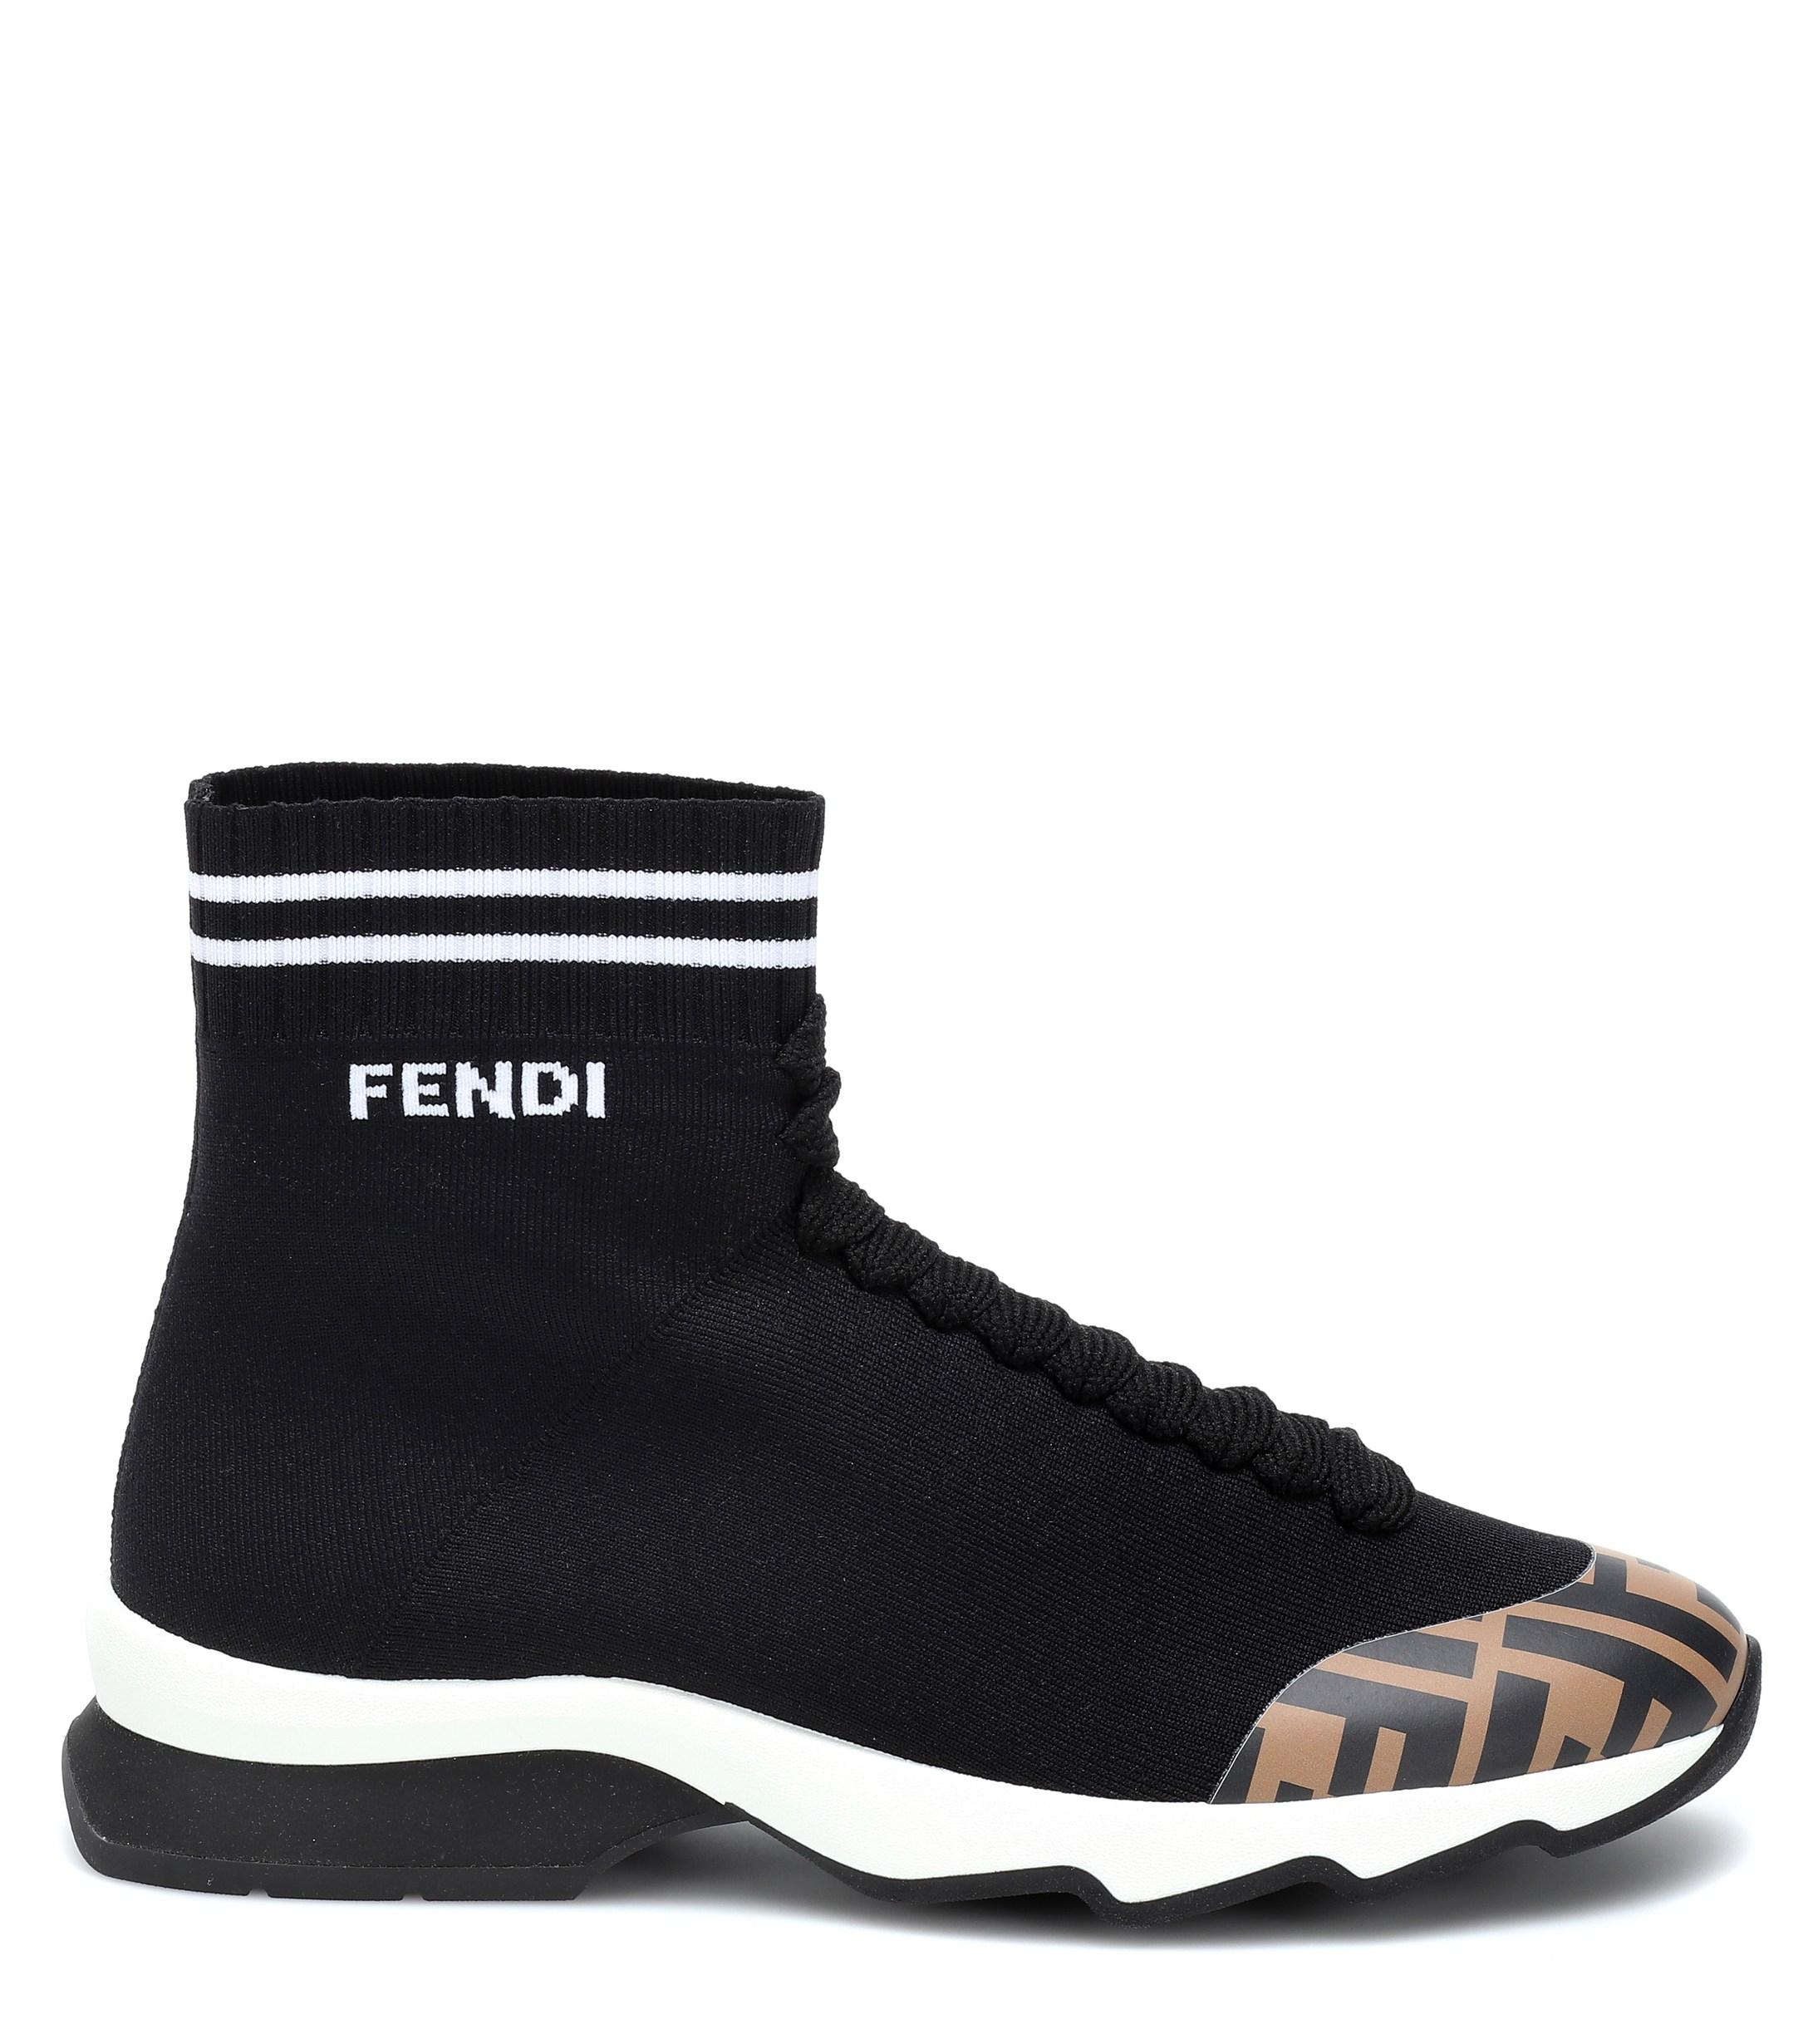 fendi shoes that look like socks